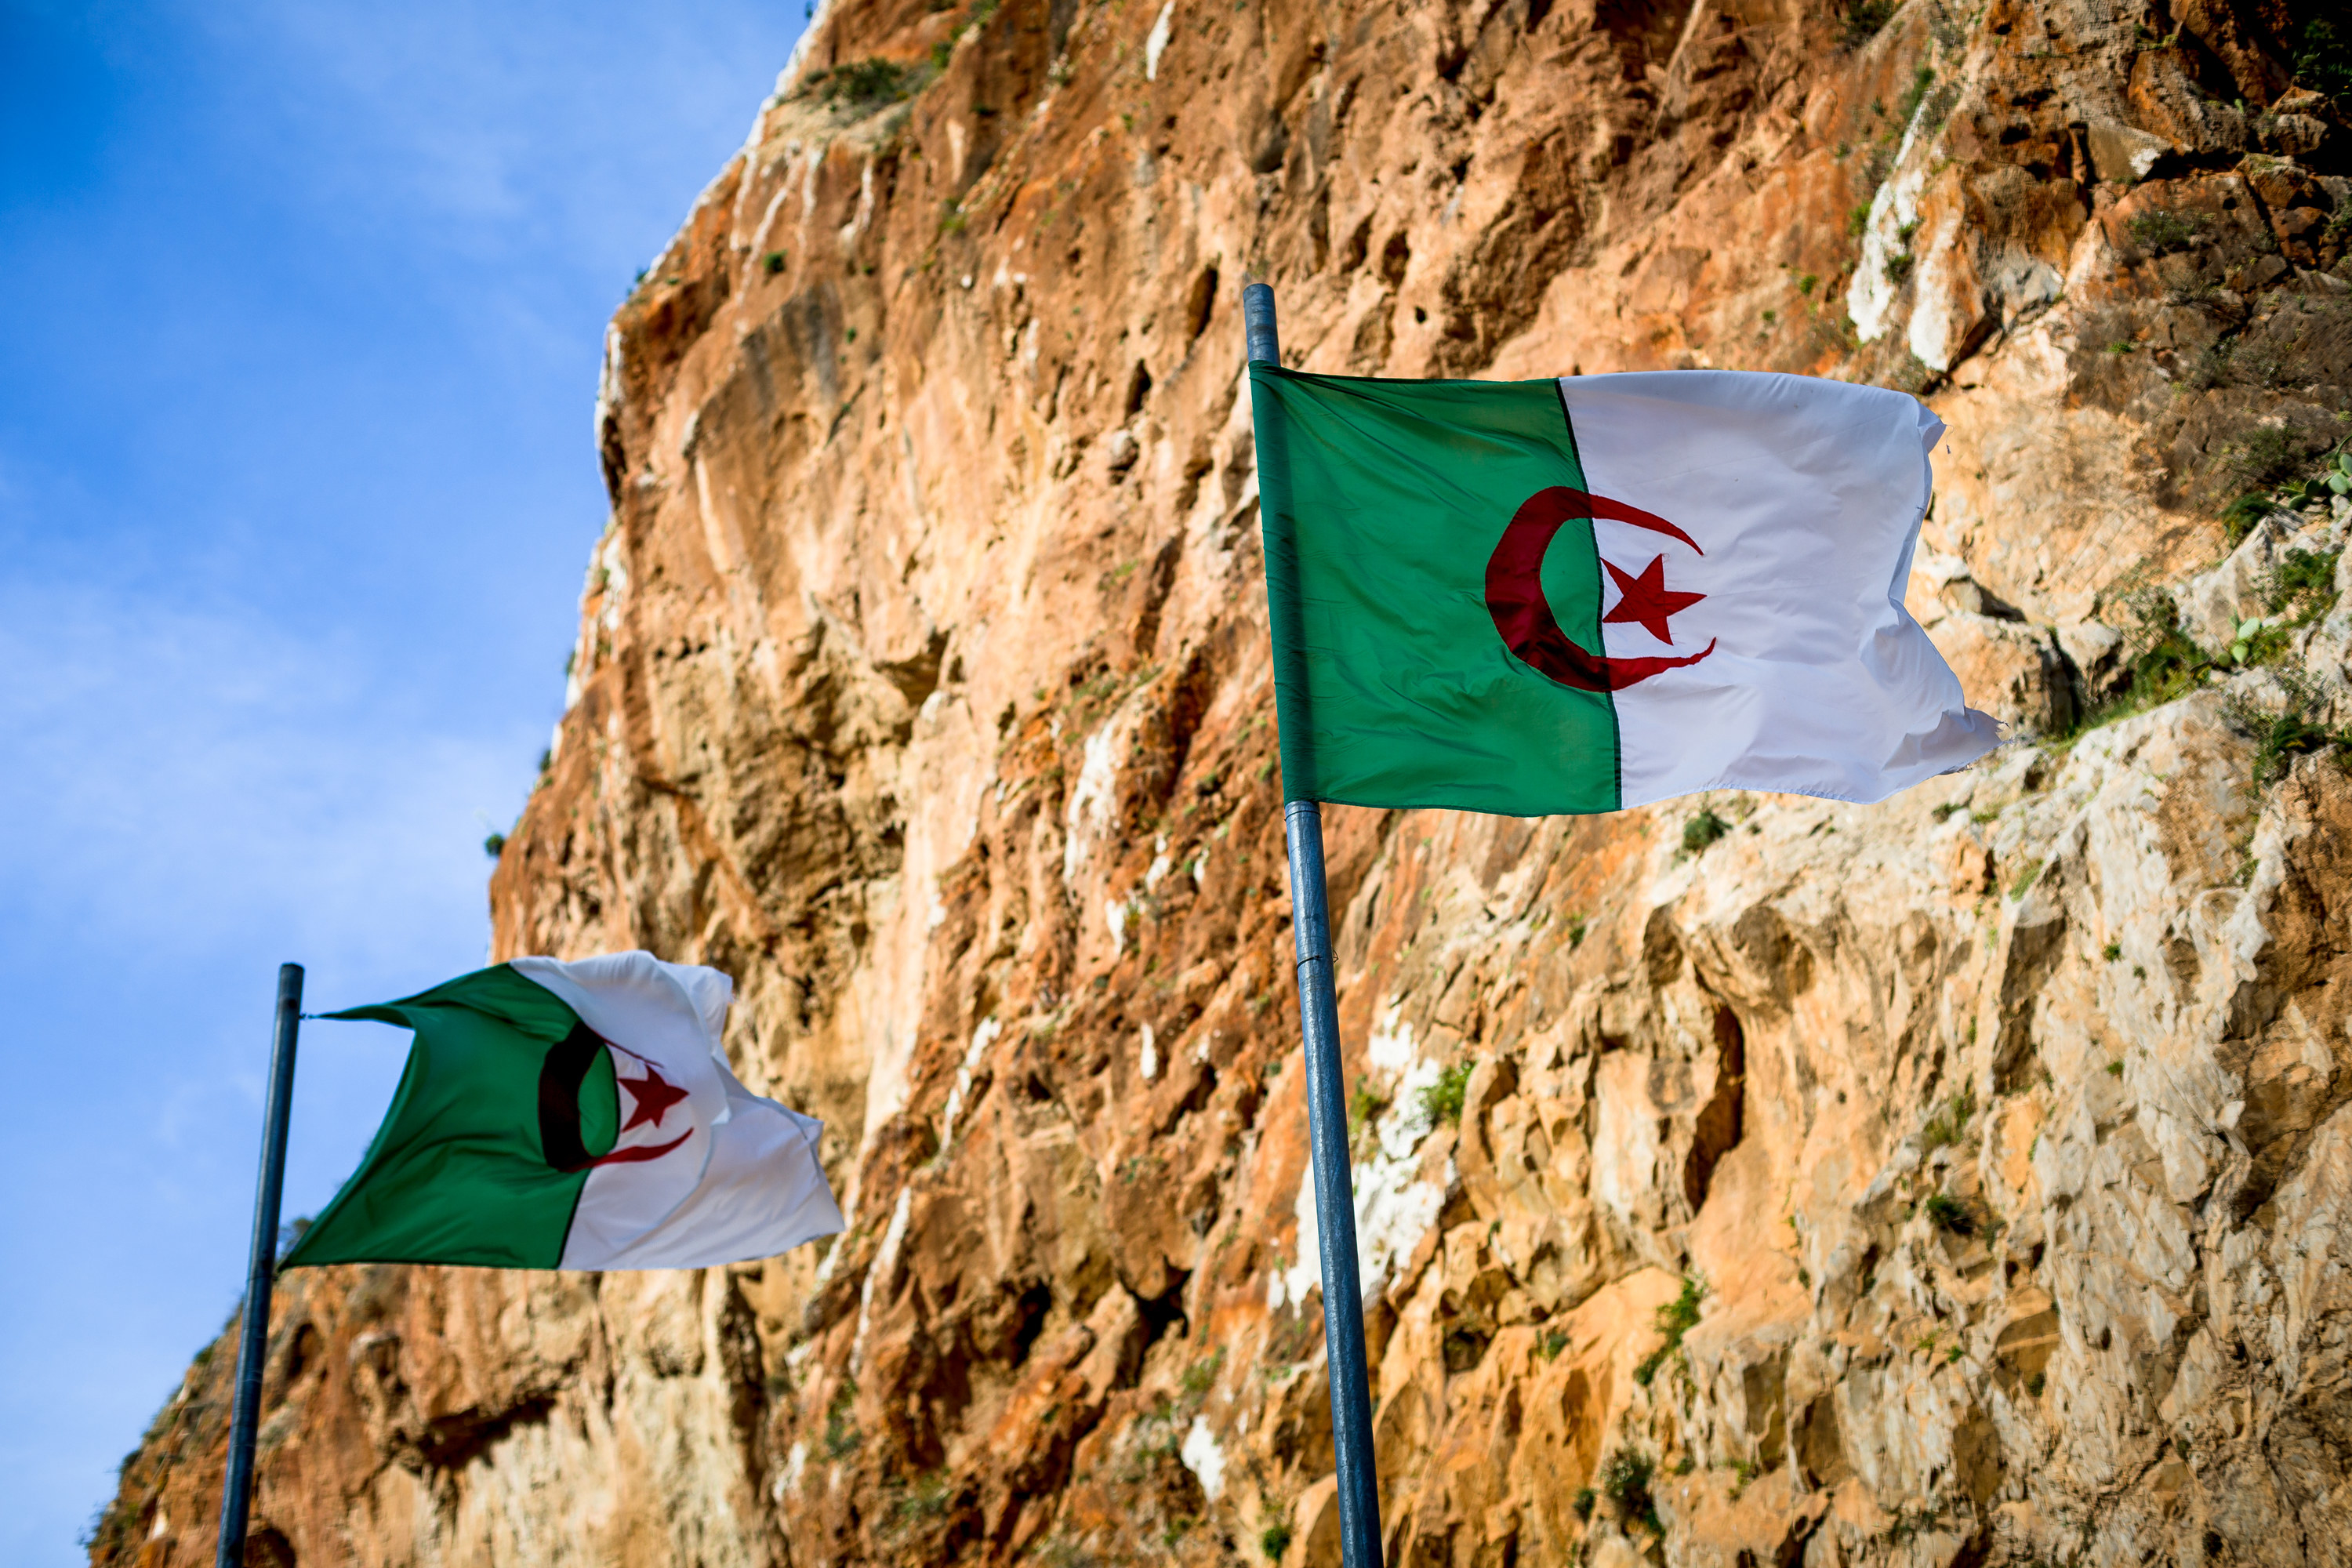 Two Algerian flags